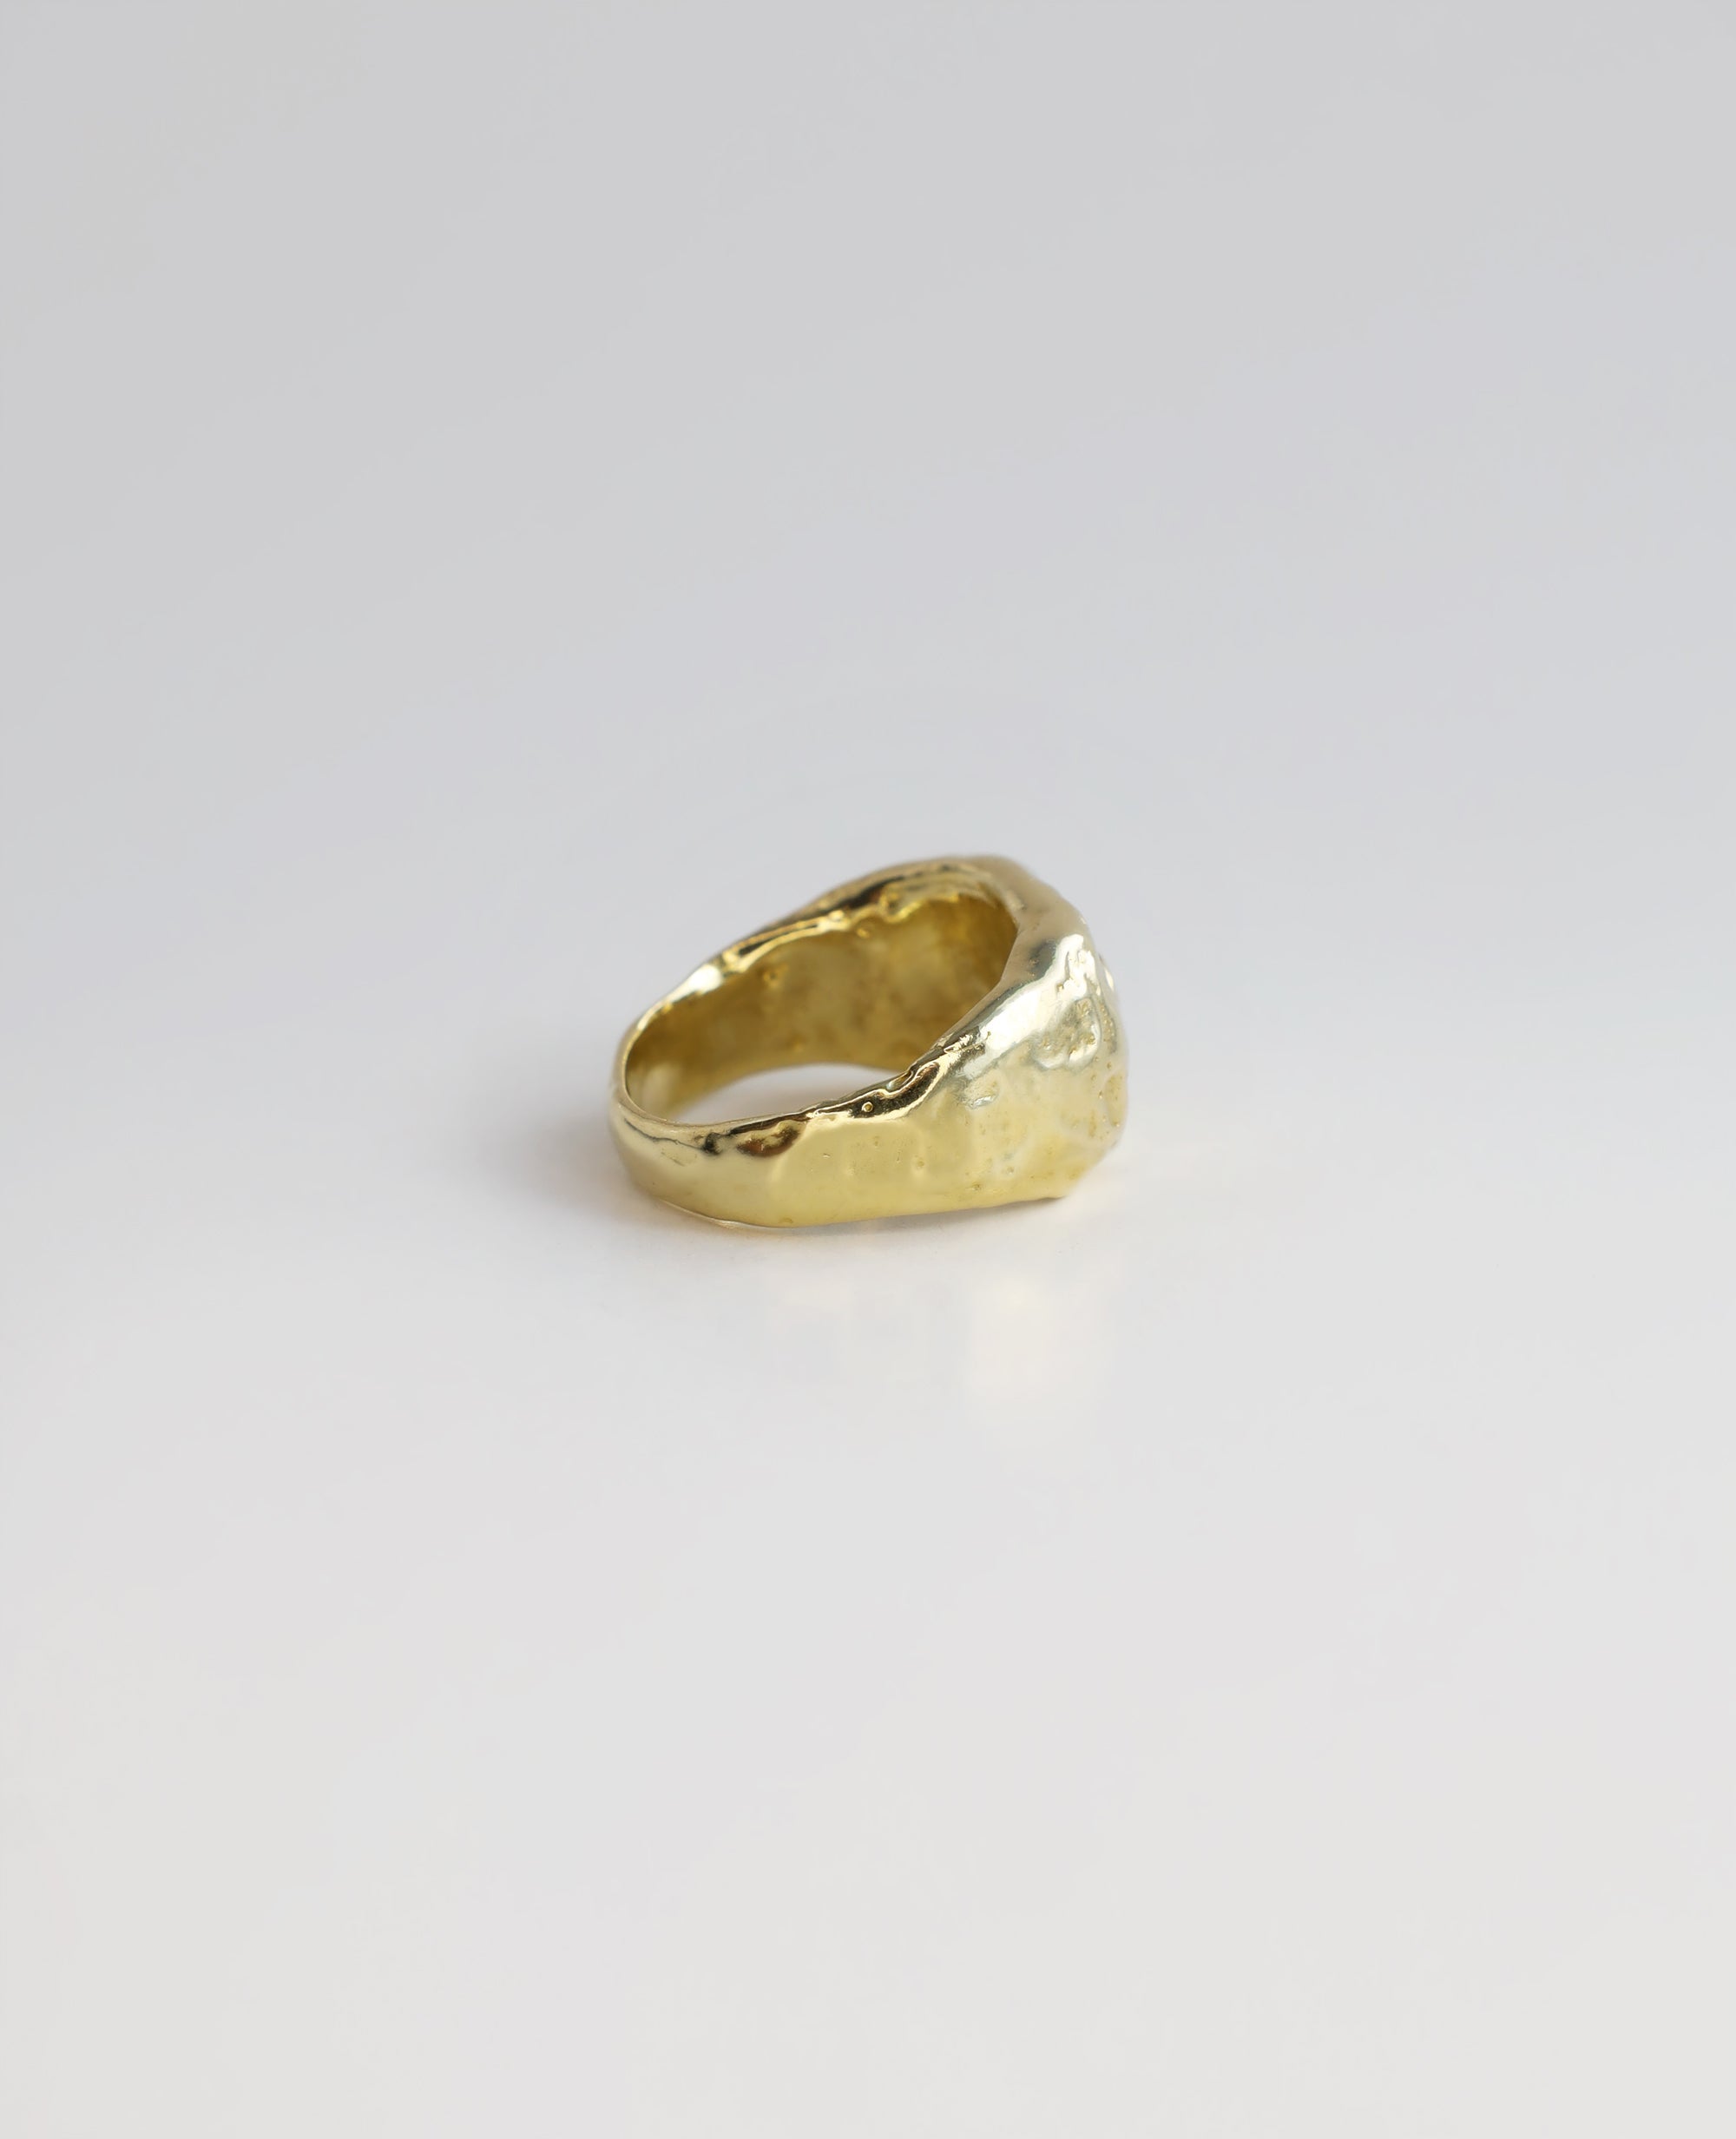 NUCLEUS SIGNET // silver ring - ORA-C jewelry - handmade jewelry by Montreal based independent designer Caroline Pham